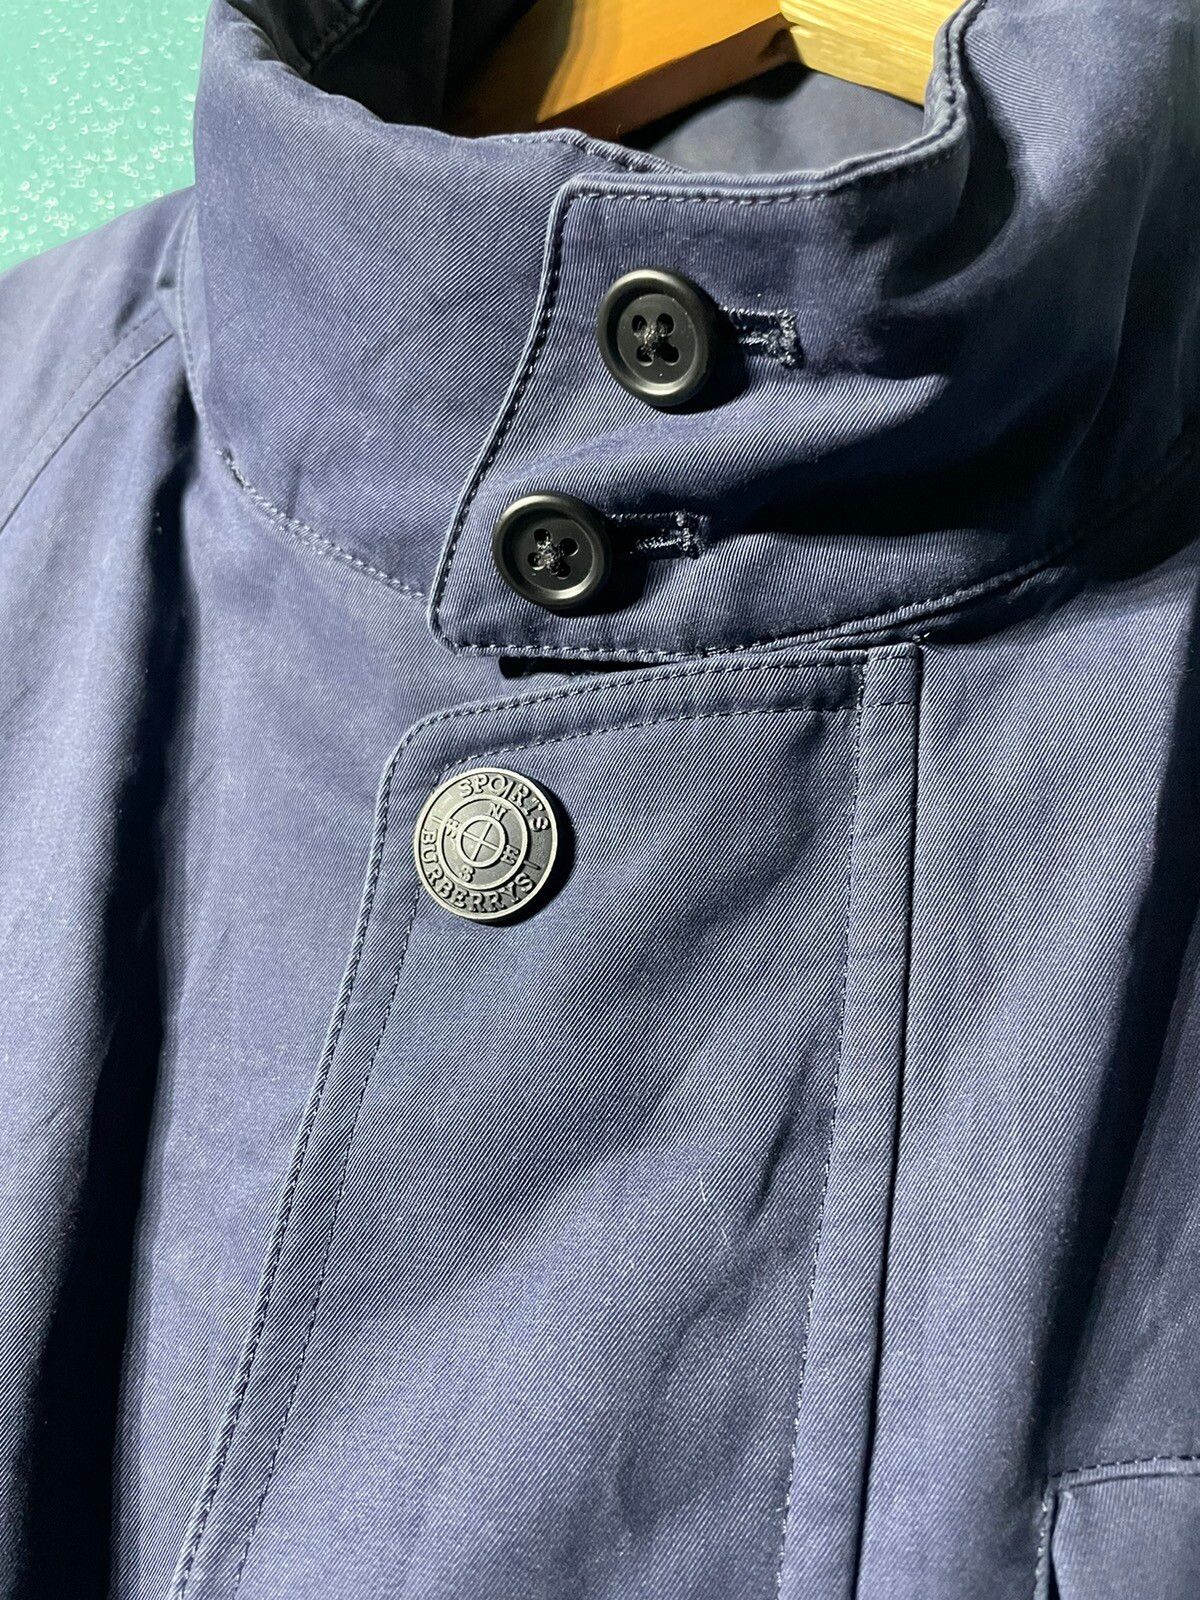 DELETE IN 24h‼️ Burberry reversible big logo jacket - 5